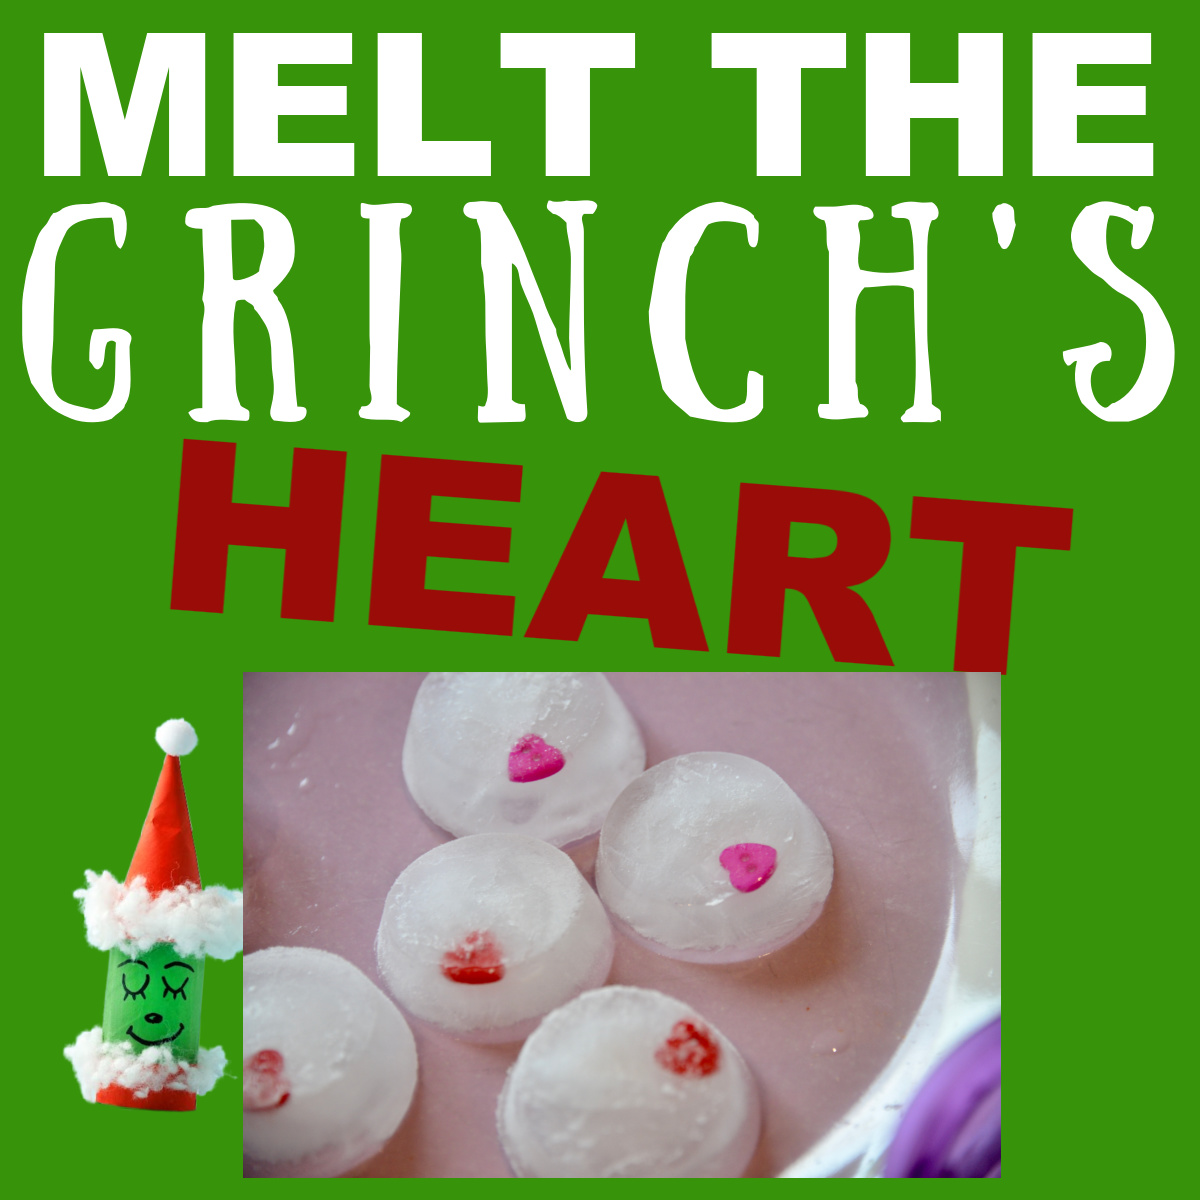 MELT-THE-GRINCHs-HEART-FB Grinch STEM Activities